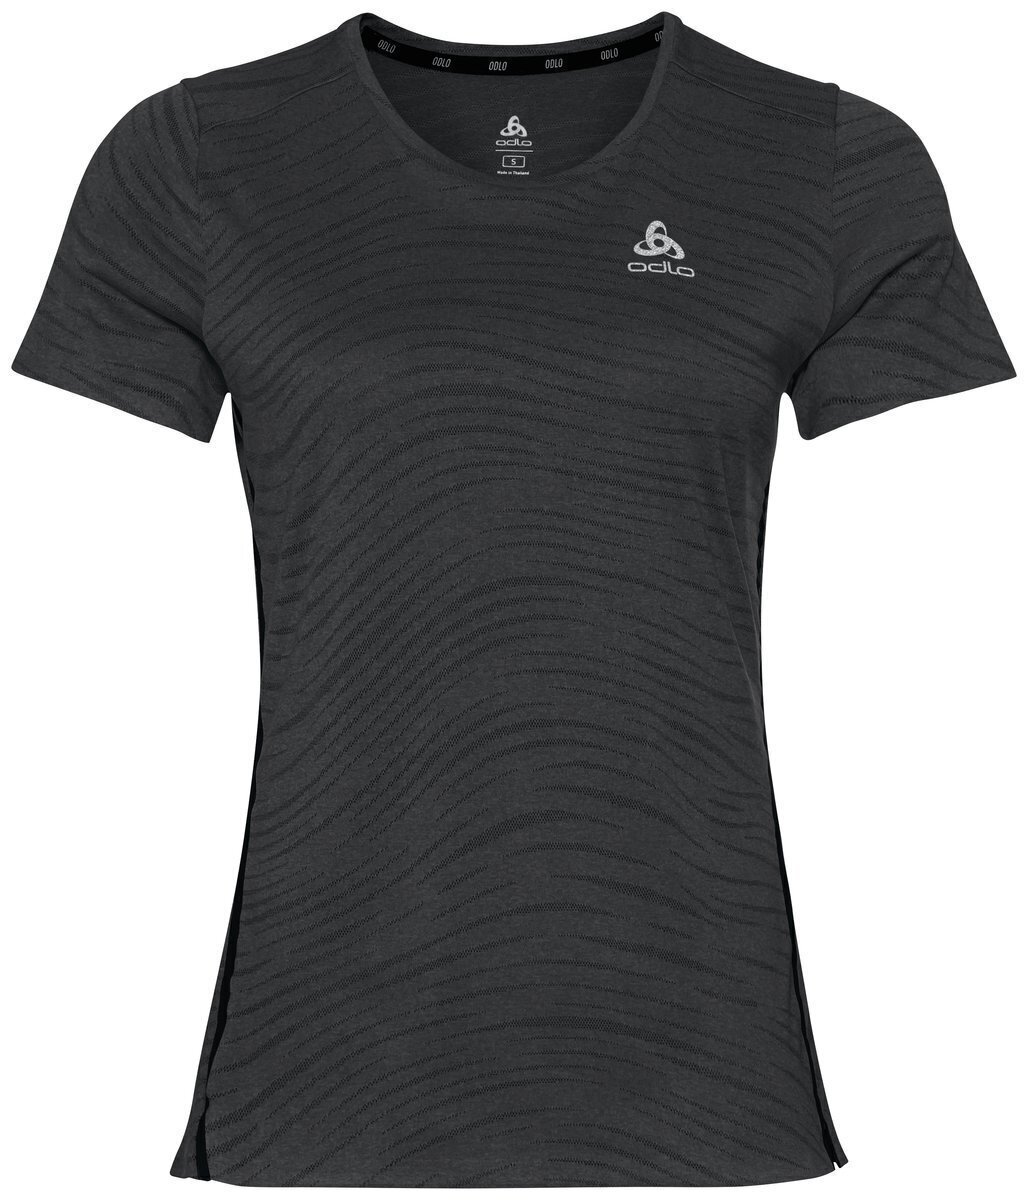 Running t-shirt with short sleeves
 Odlo Zeroweight Engineered Chill-Tec T-Shirt Black Melange S Running t-shirt with short sleeves